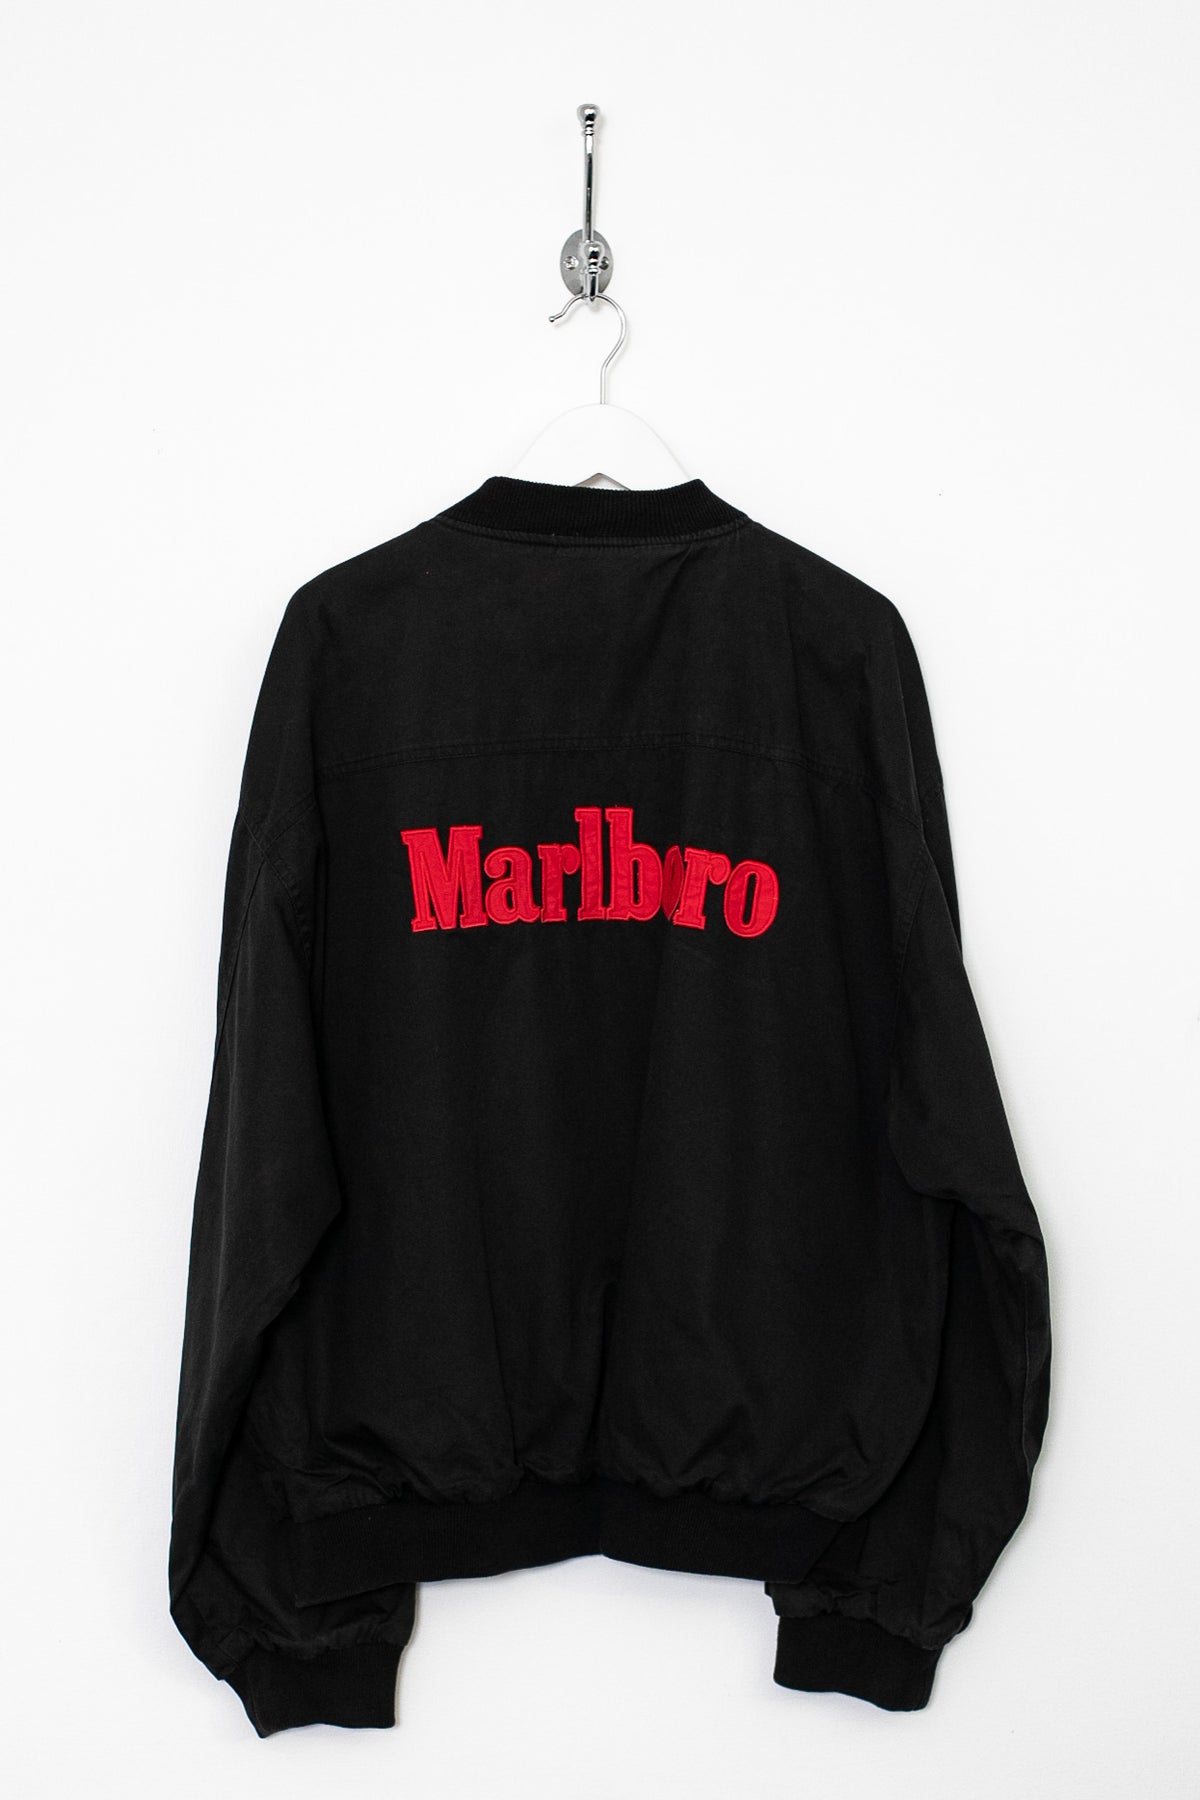 90s Marlboro Reversible Jacket (M)